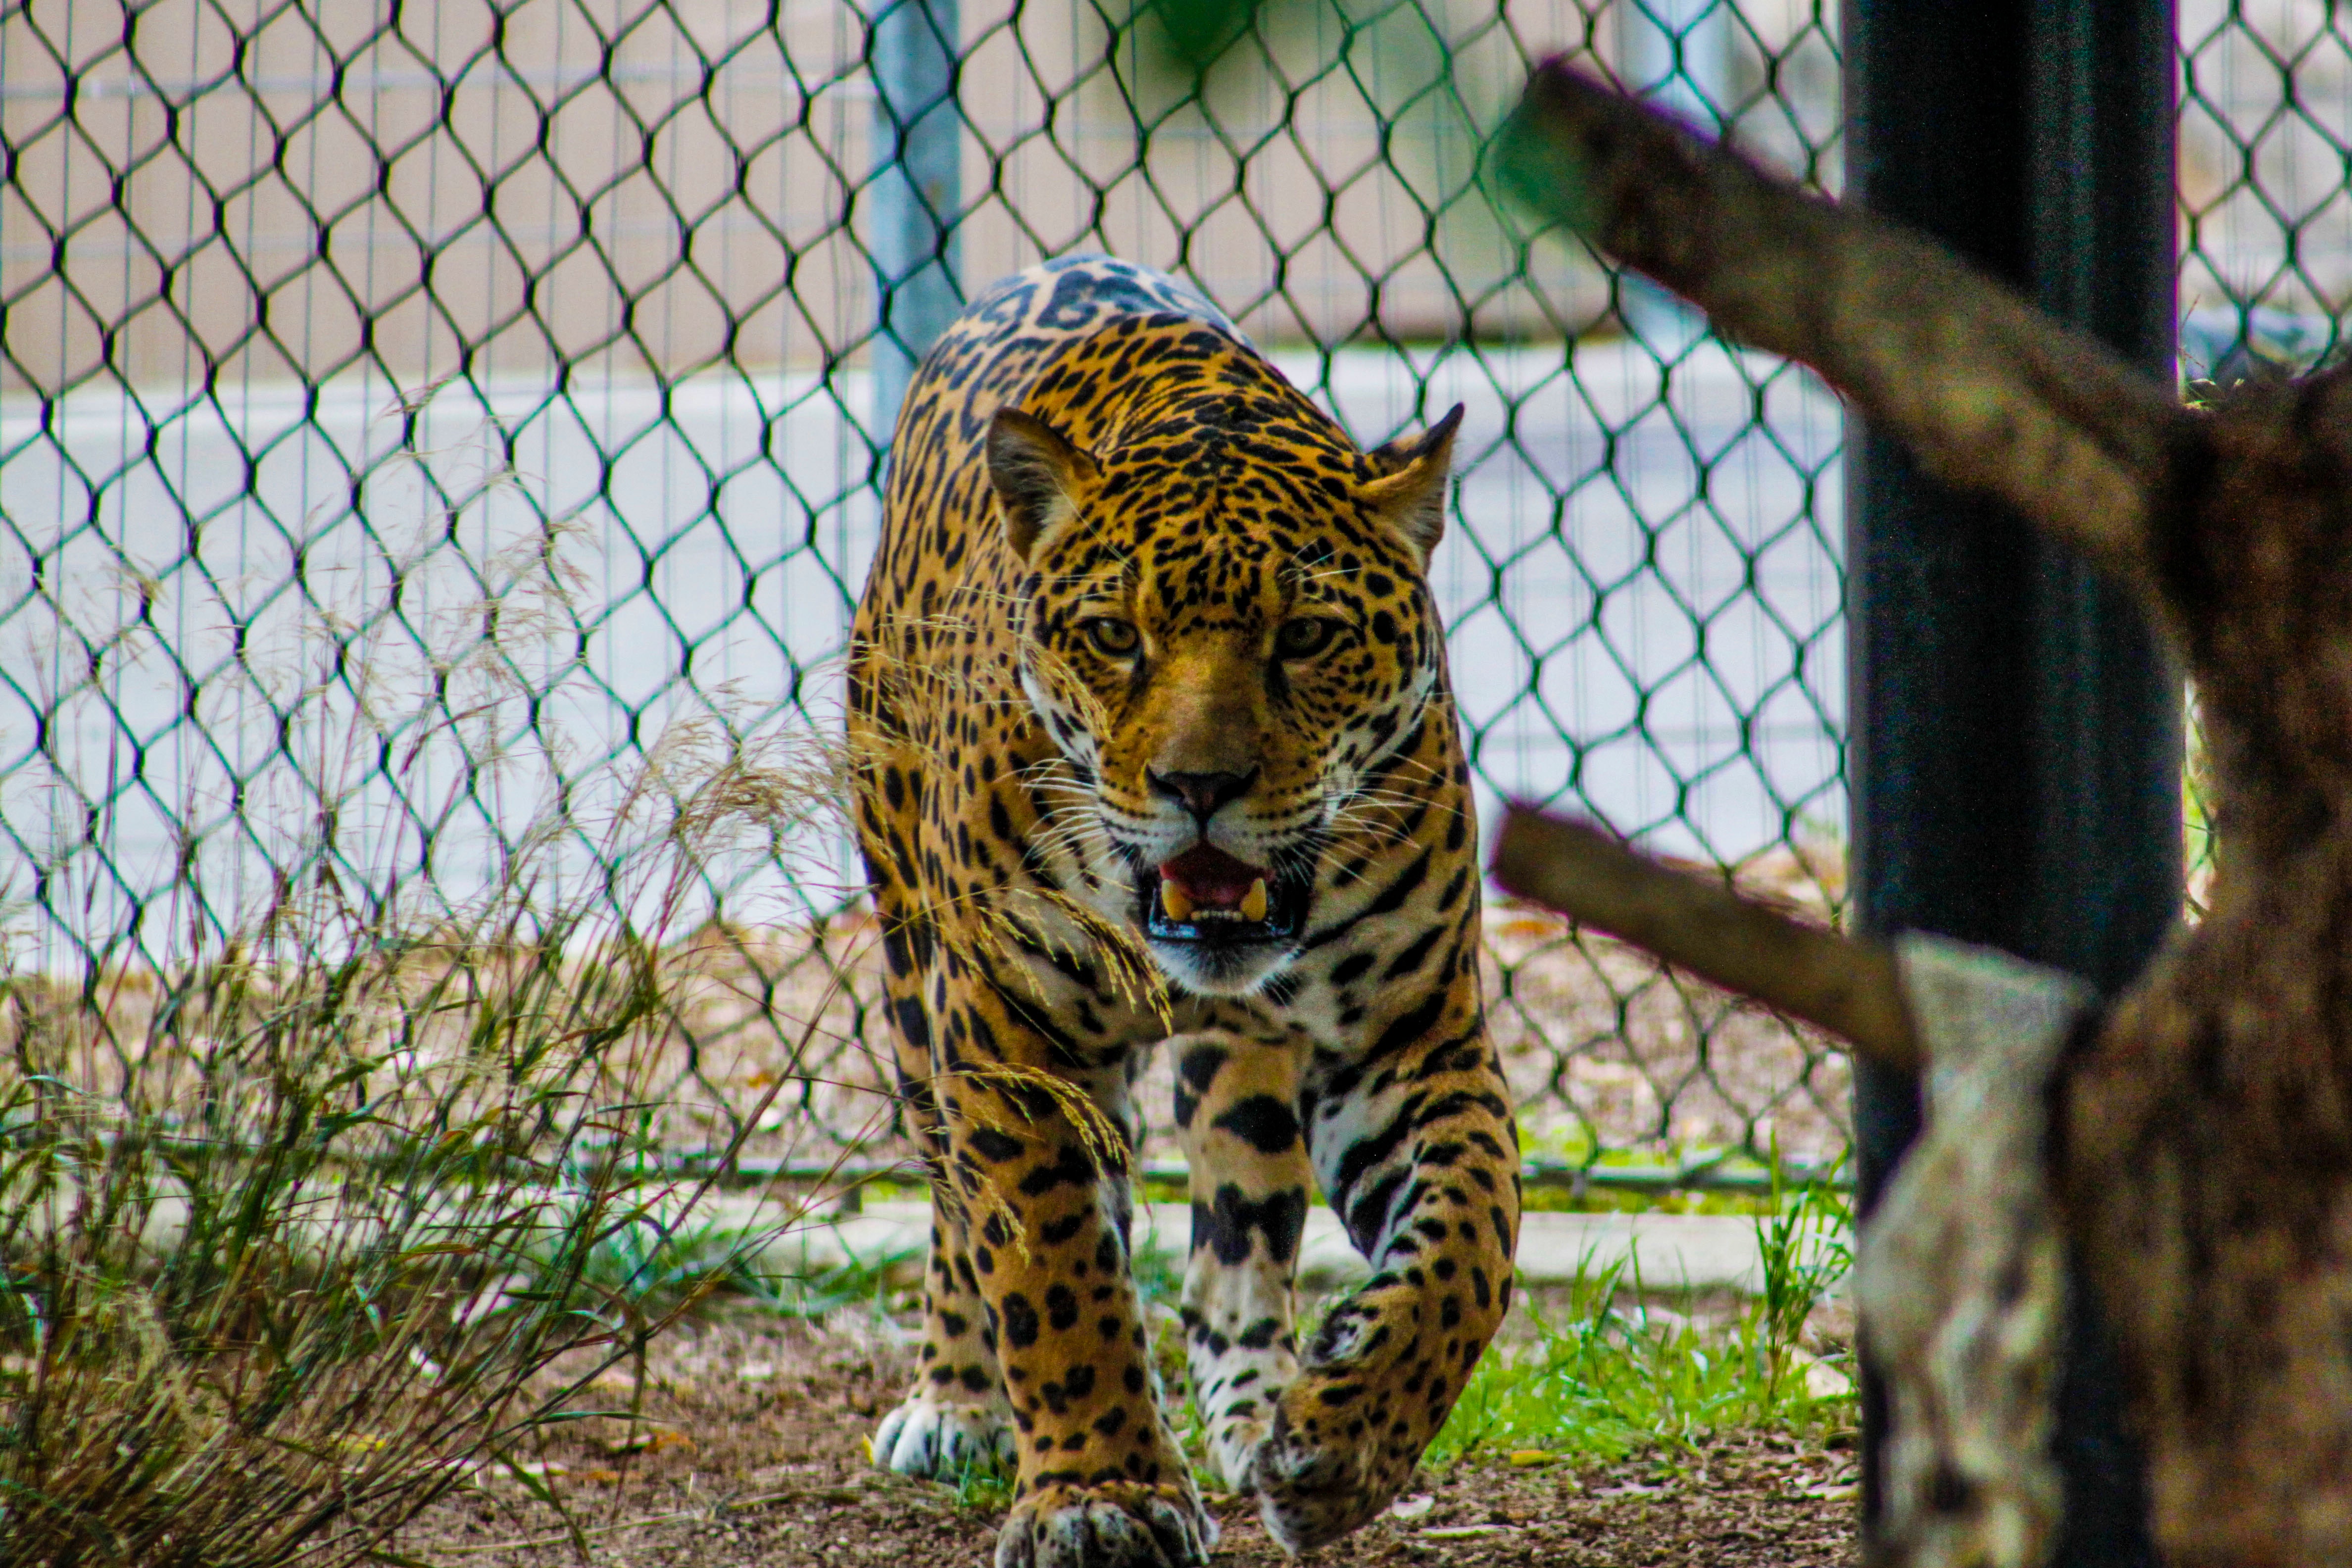 Growling leopard inside enclosure photo